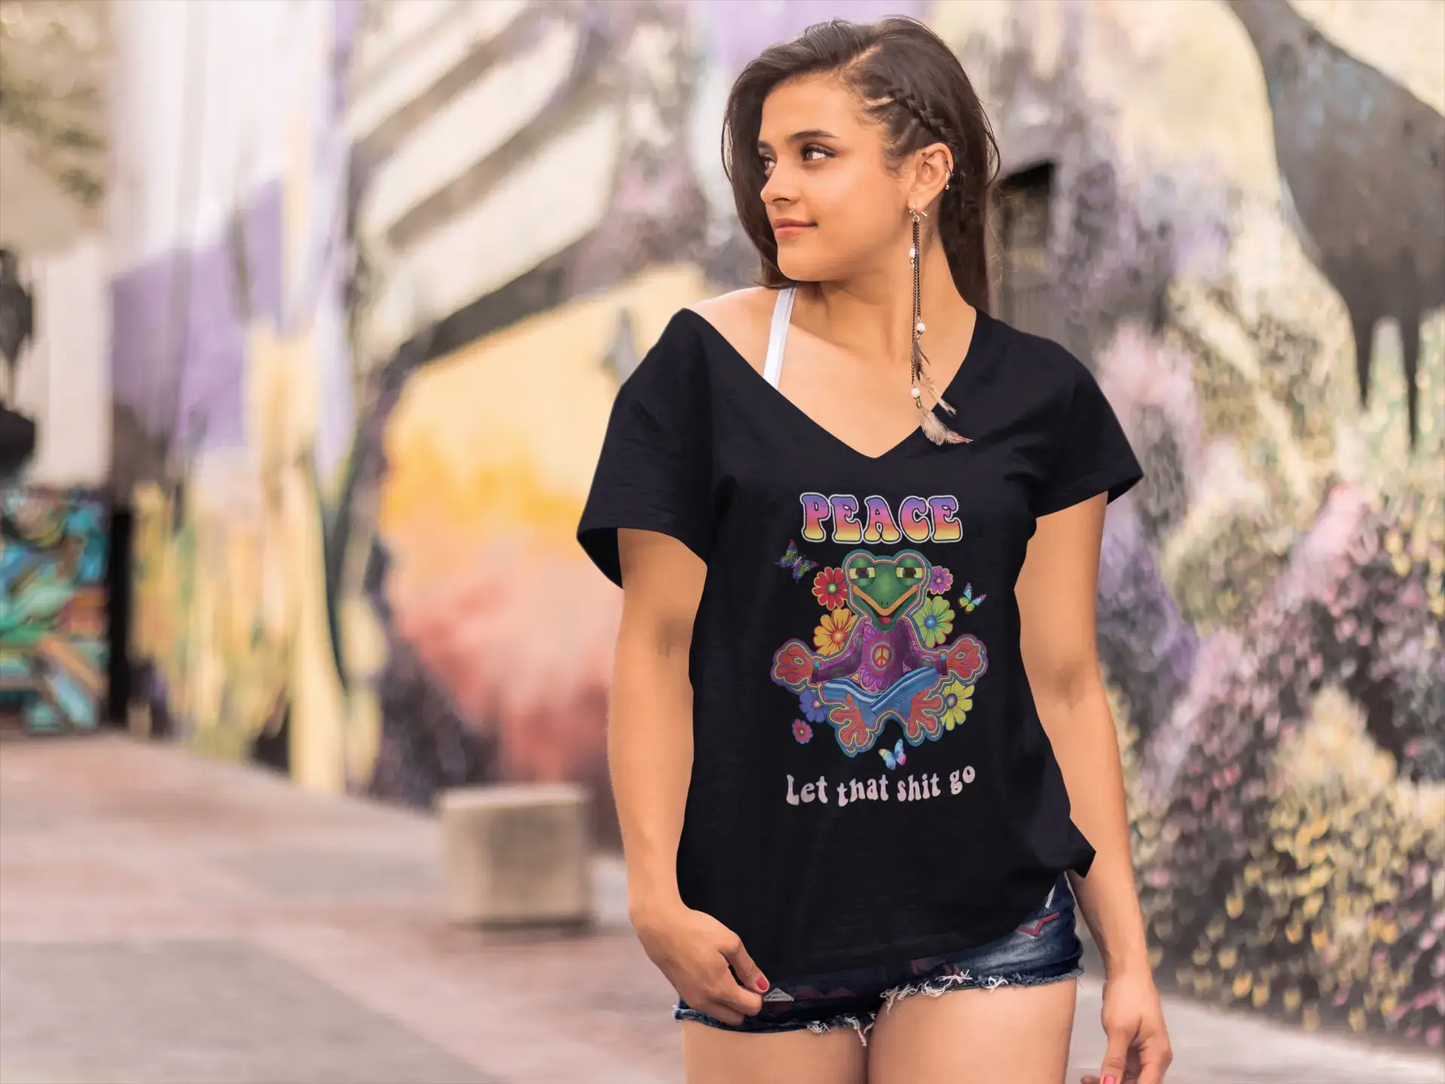 ULTRABASIC Women's V-Neck T-Shirt Buddha Frog Peace - Let That Shit Go - Spiritual Yoga Gift Tee Shirt